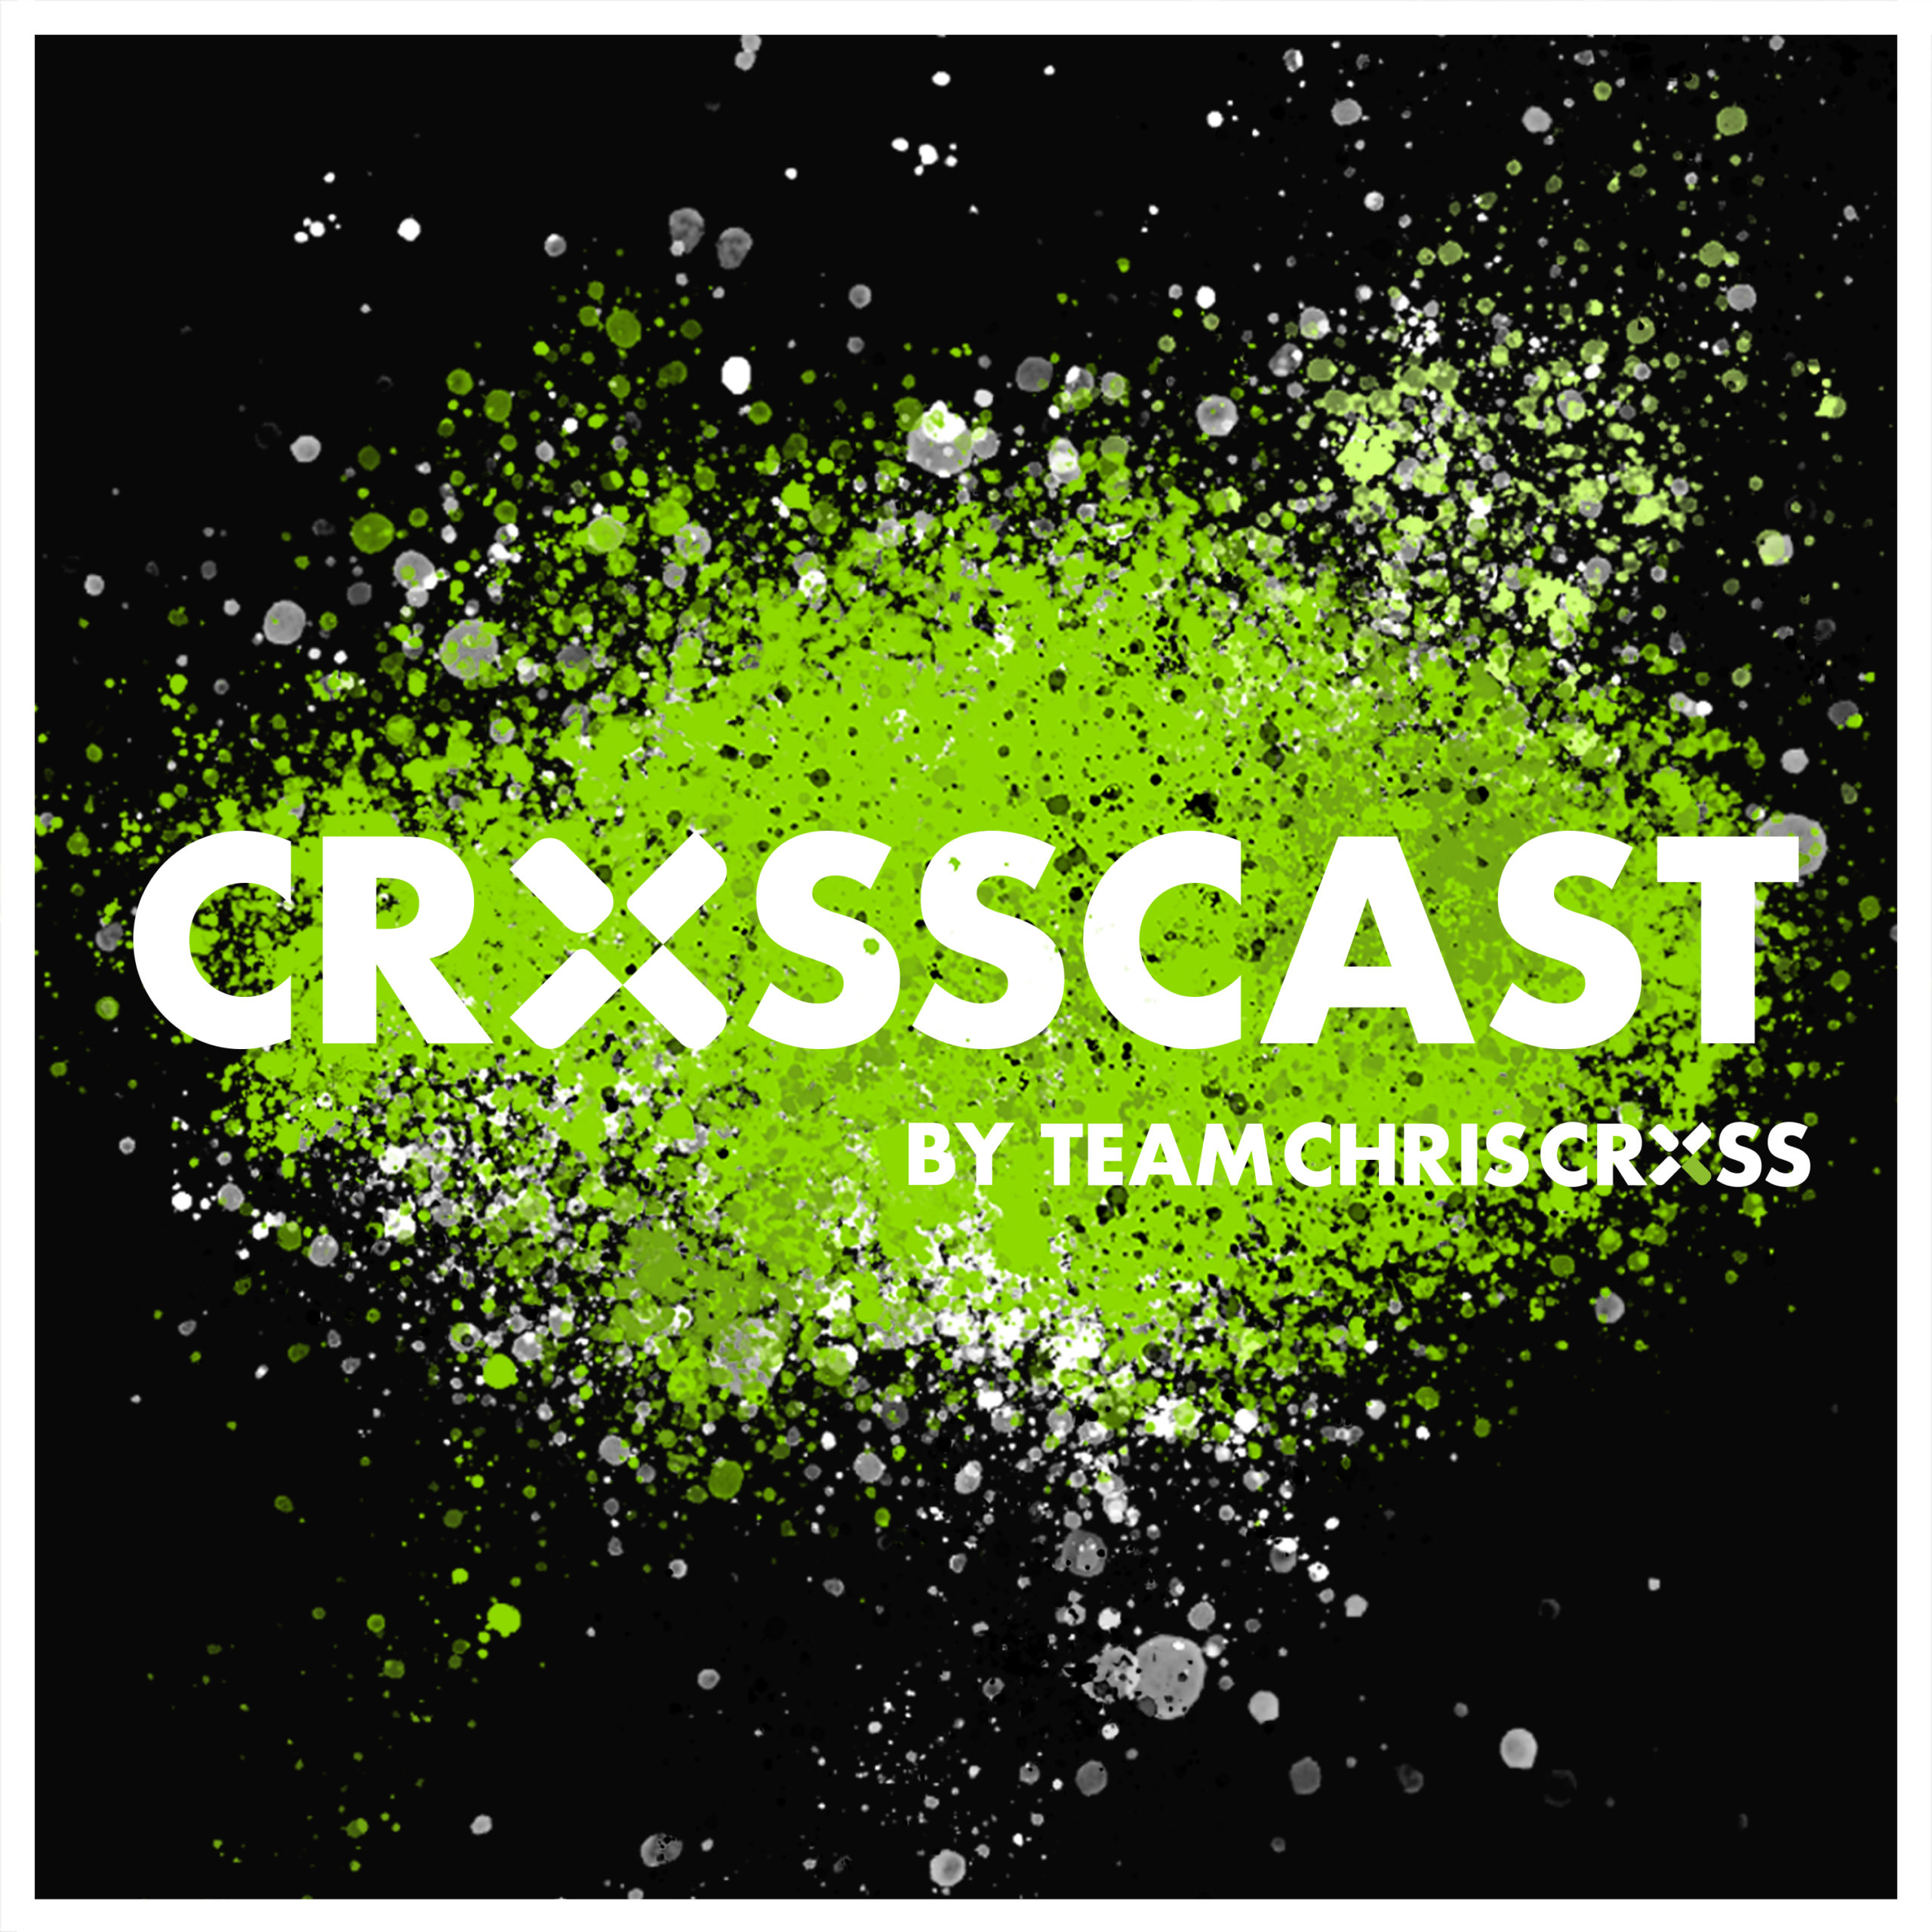 You are currently viewing OCR CrossCast + Gewinne 2 Xletix-Freistarts